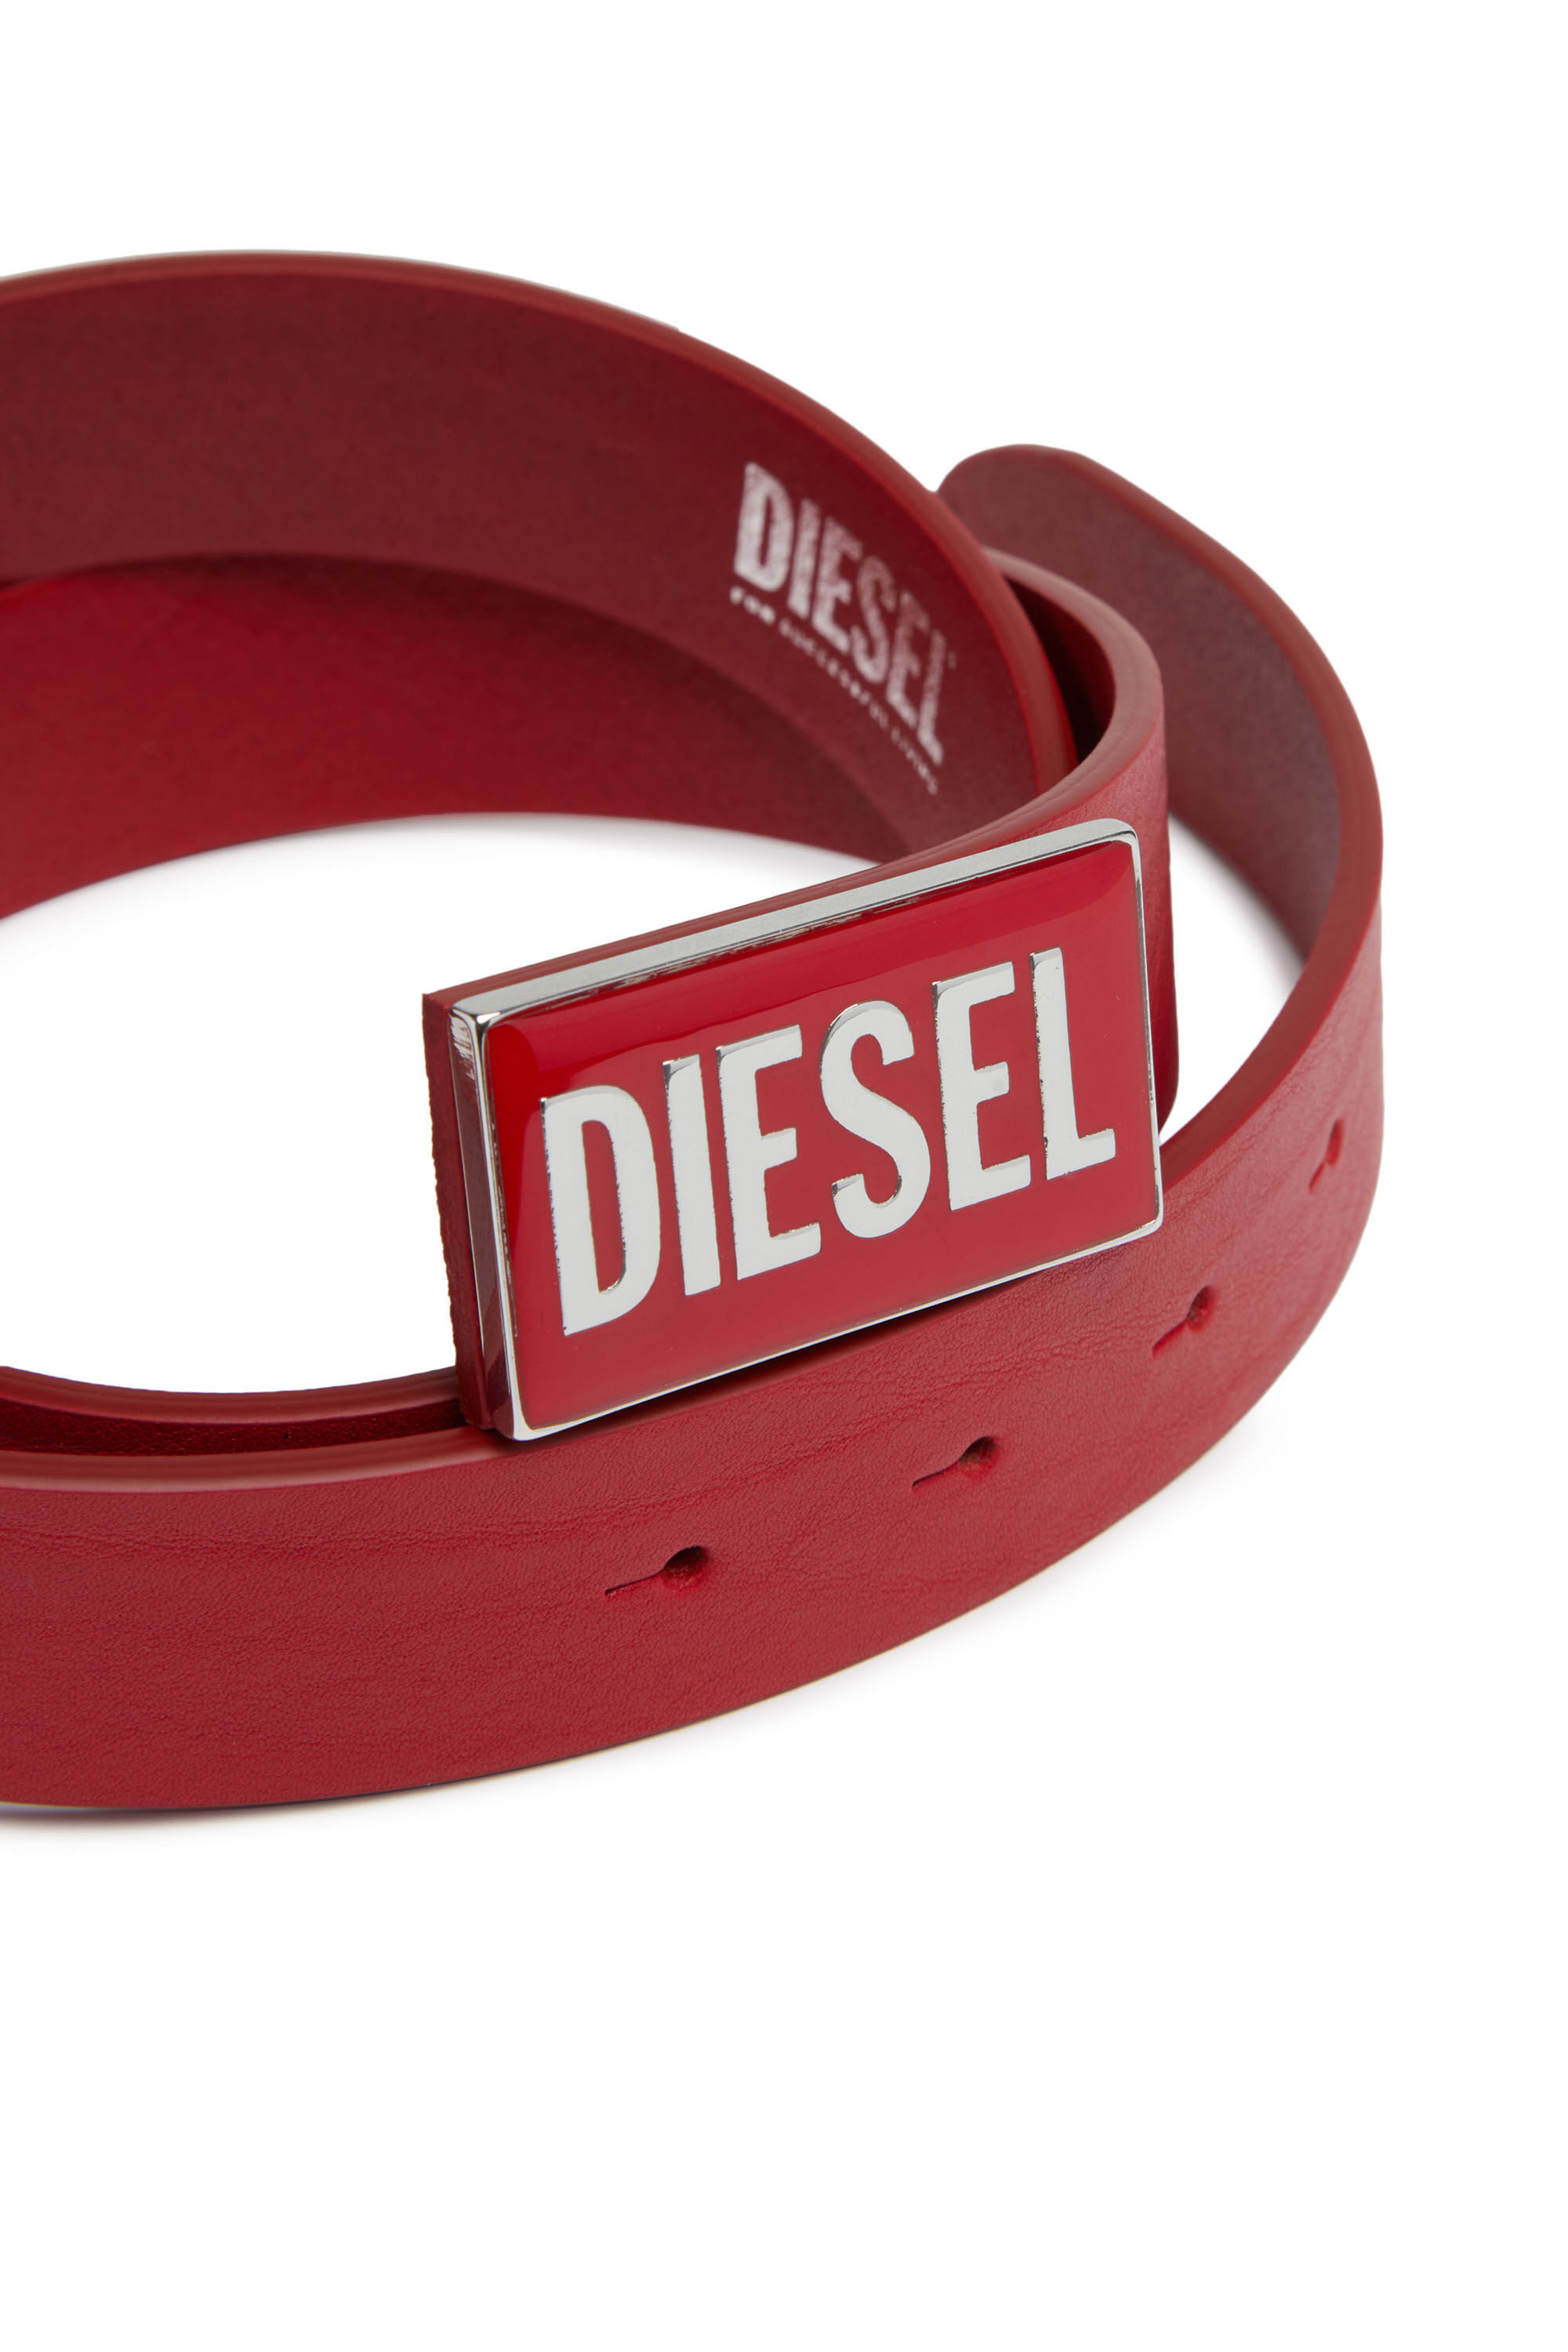 Diesel - B-GLOSSY, Rosso - Image 3